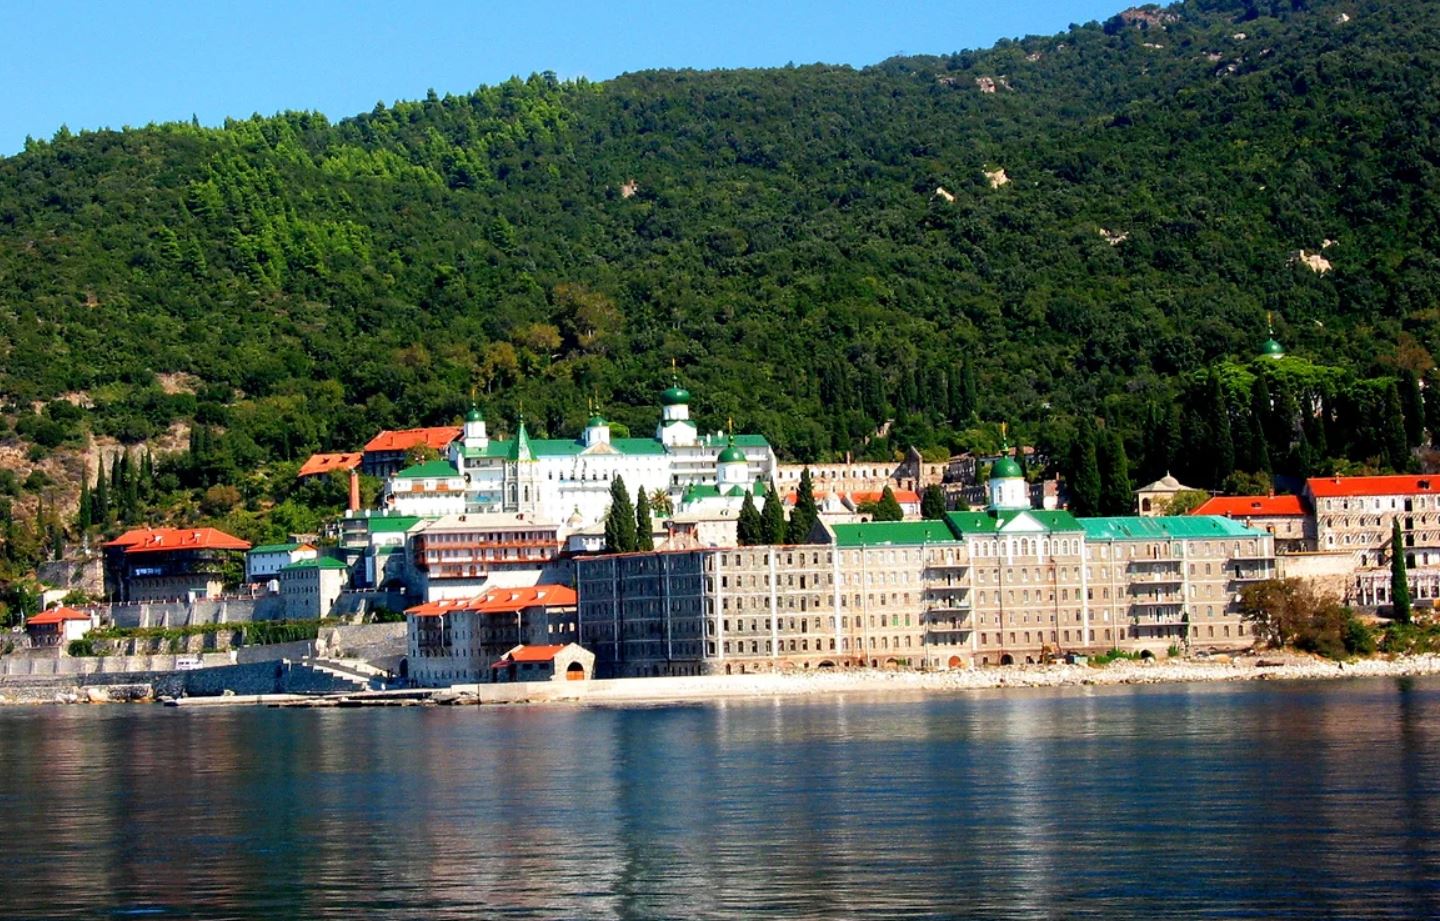 Mt athos russian monastery